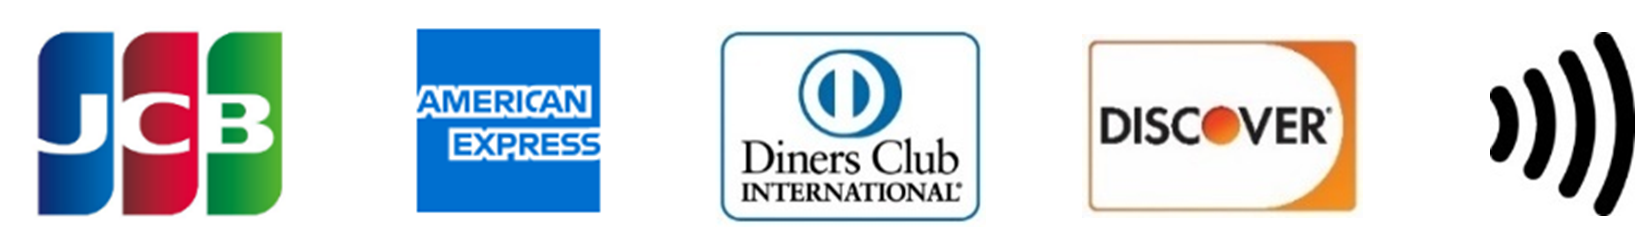 JCB/American Express/Diners Club/Discover̃^b`ς121()AlscHoXŎ舵Jn